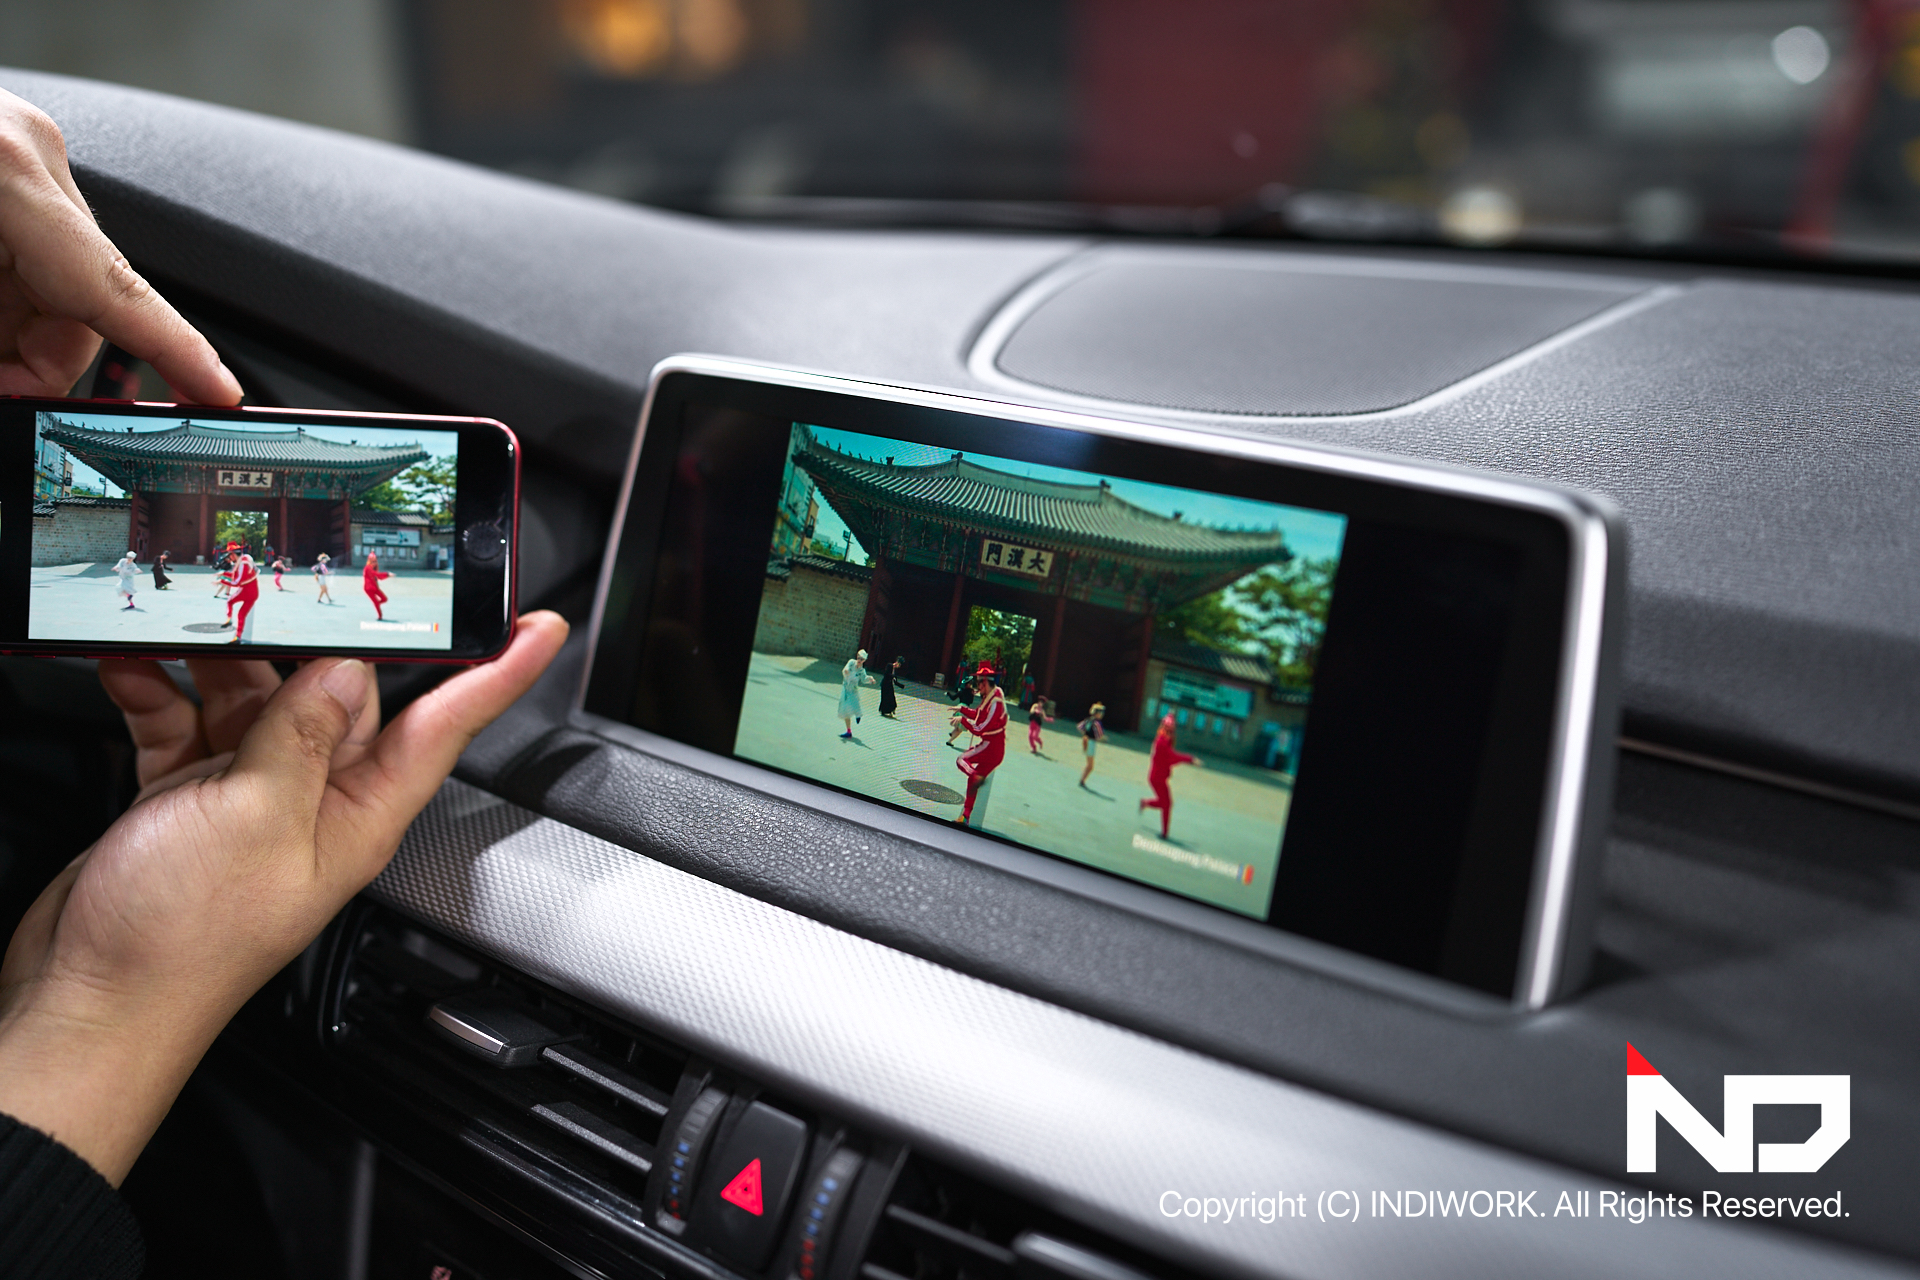 Apple Carplay smartphone mirroring for 2016 BMW X5 F15 "SCB-NBT"